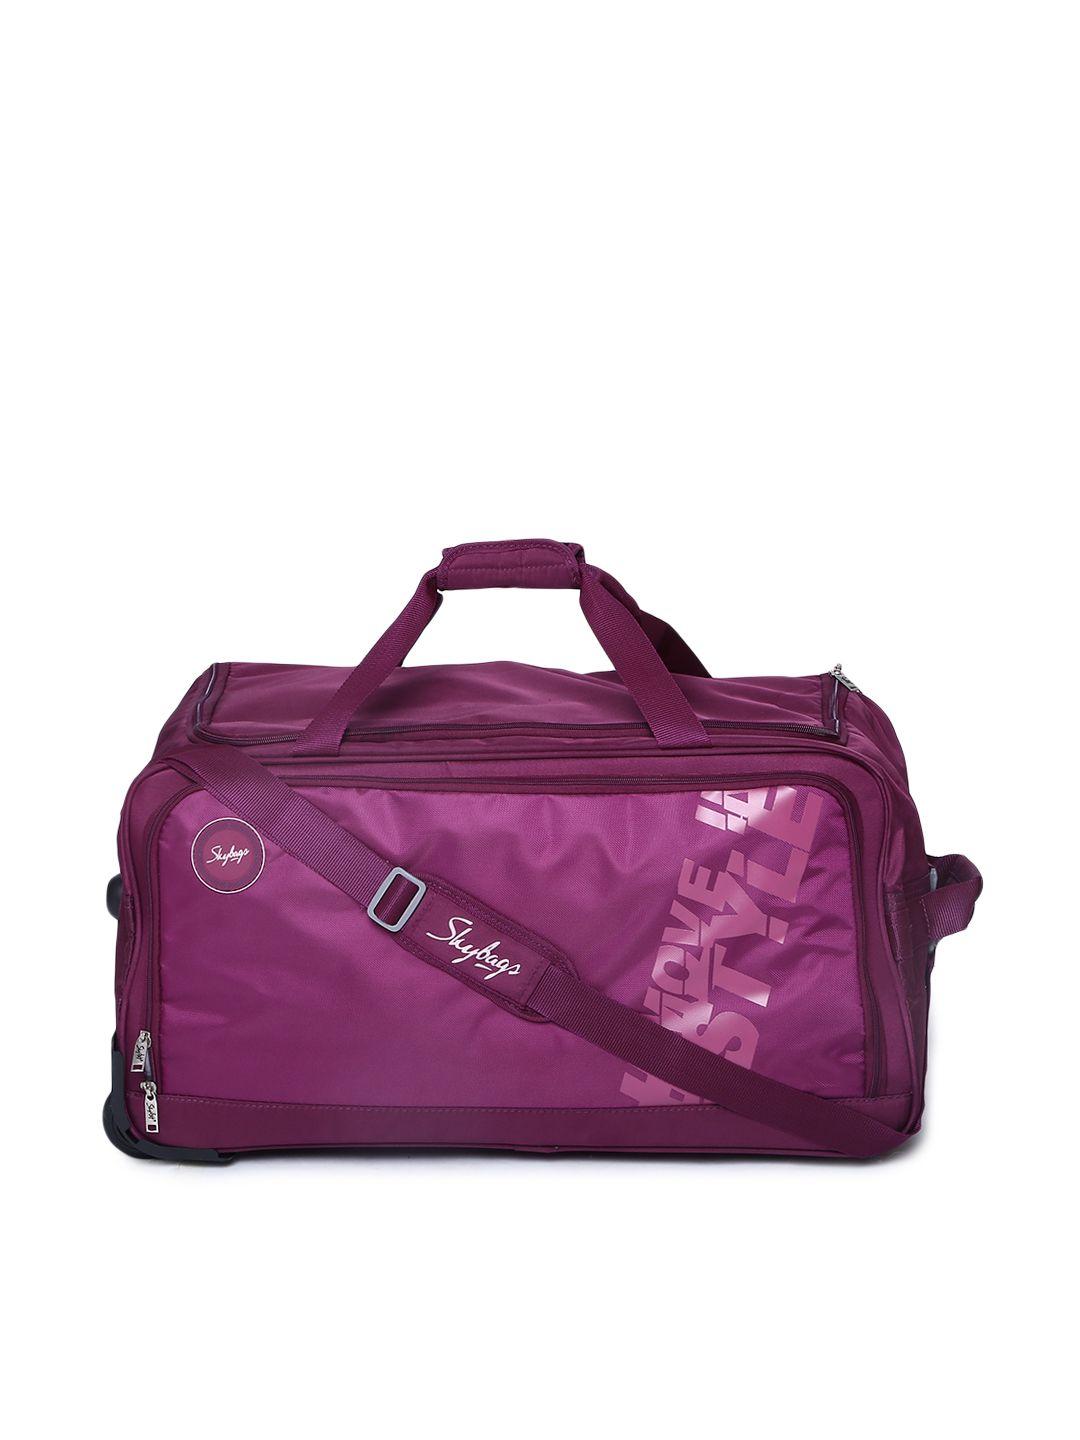 skybags unisex purple two-toned casper trolley duffle bag